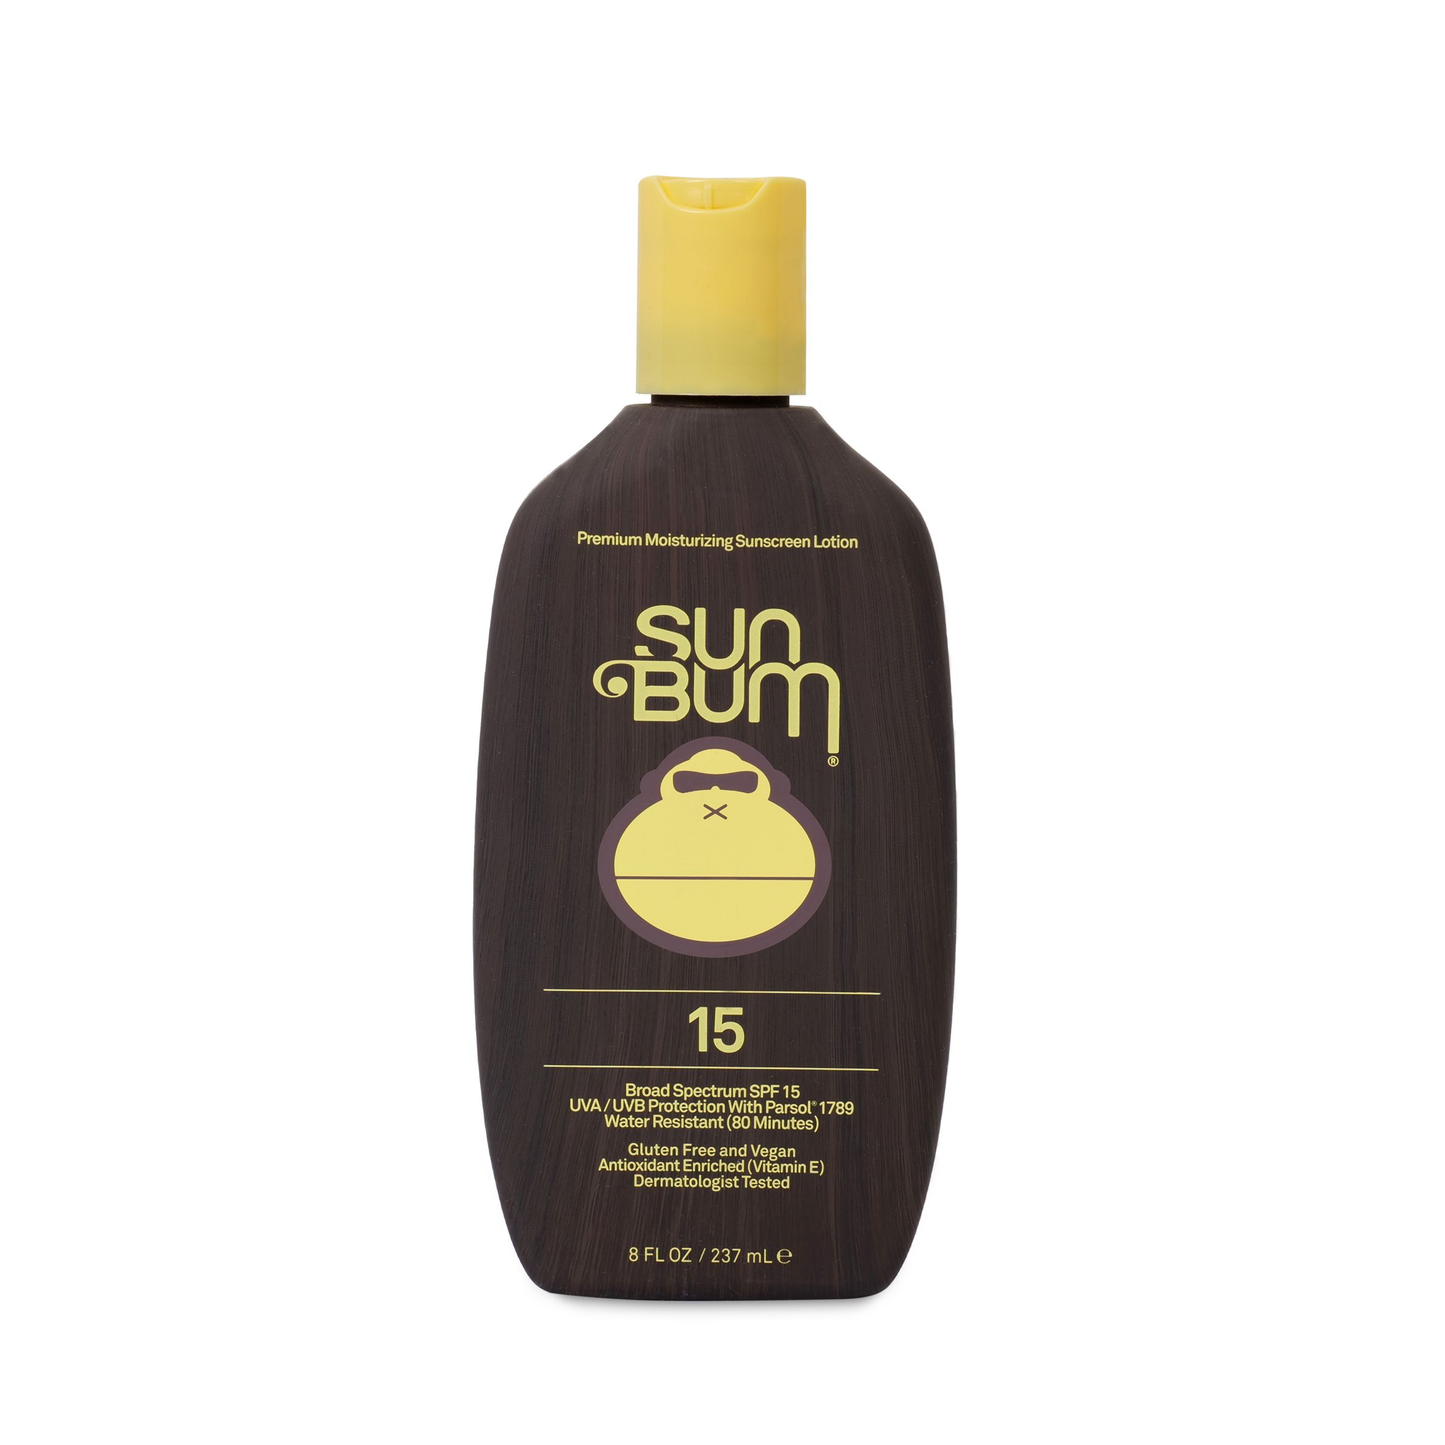 Sun Bum Original Sunscreen Lotion SPF15